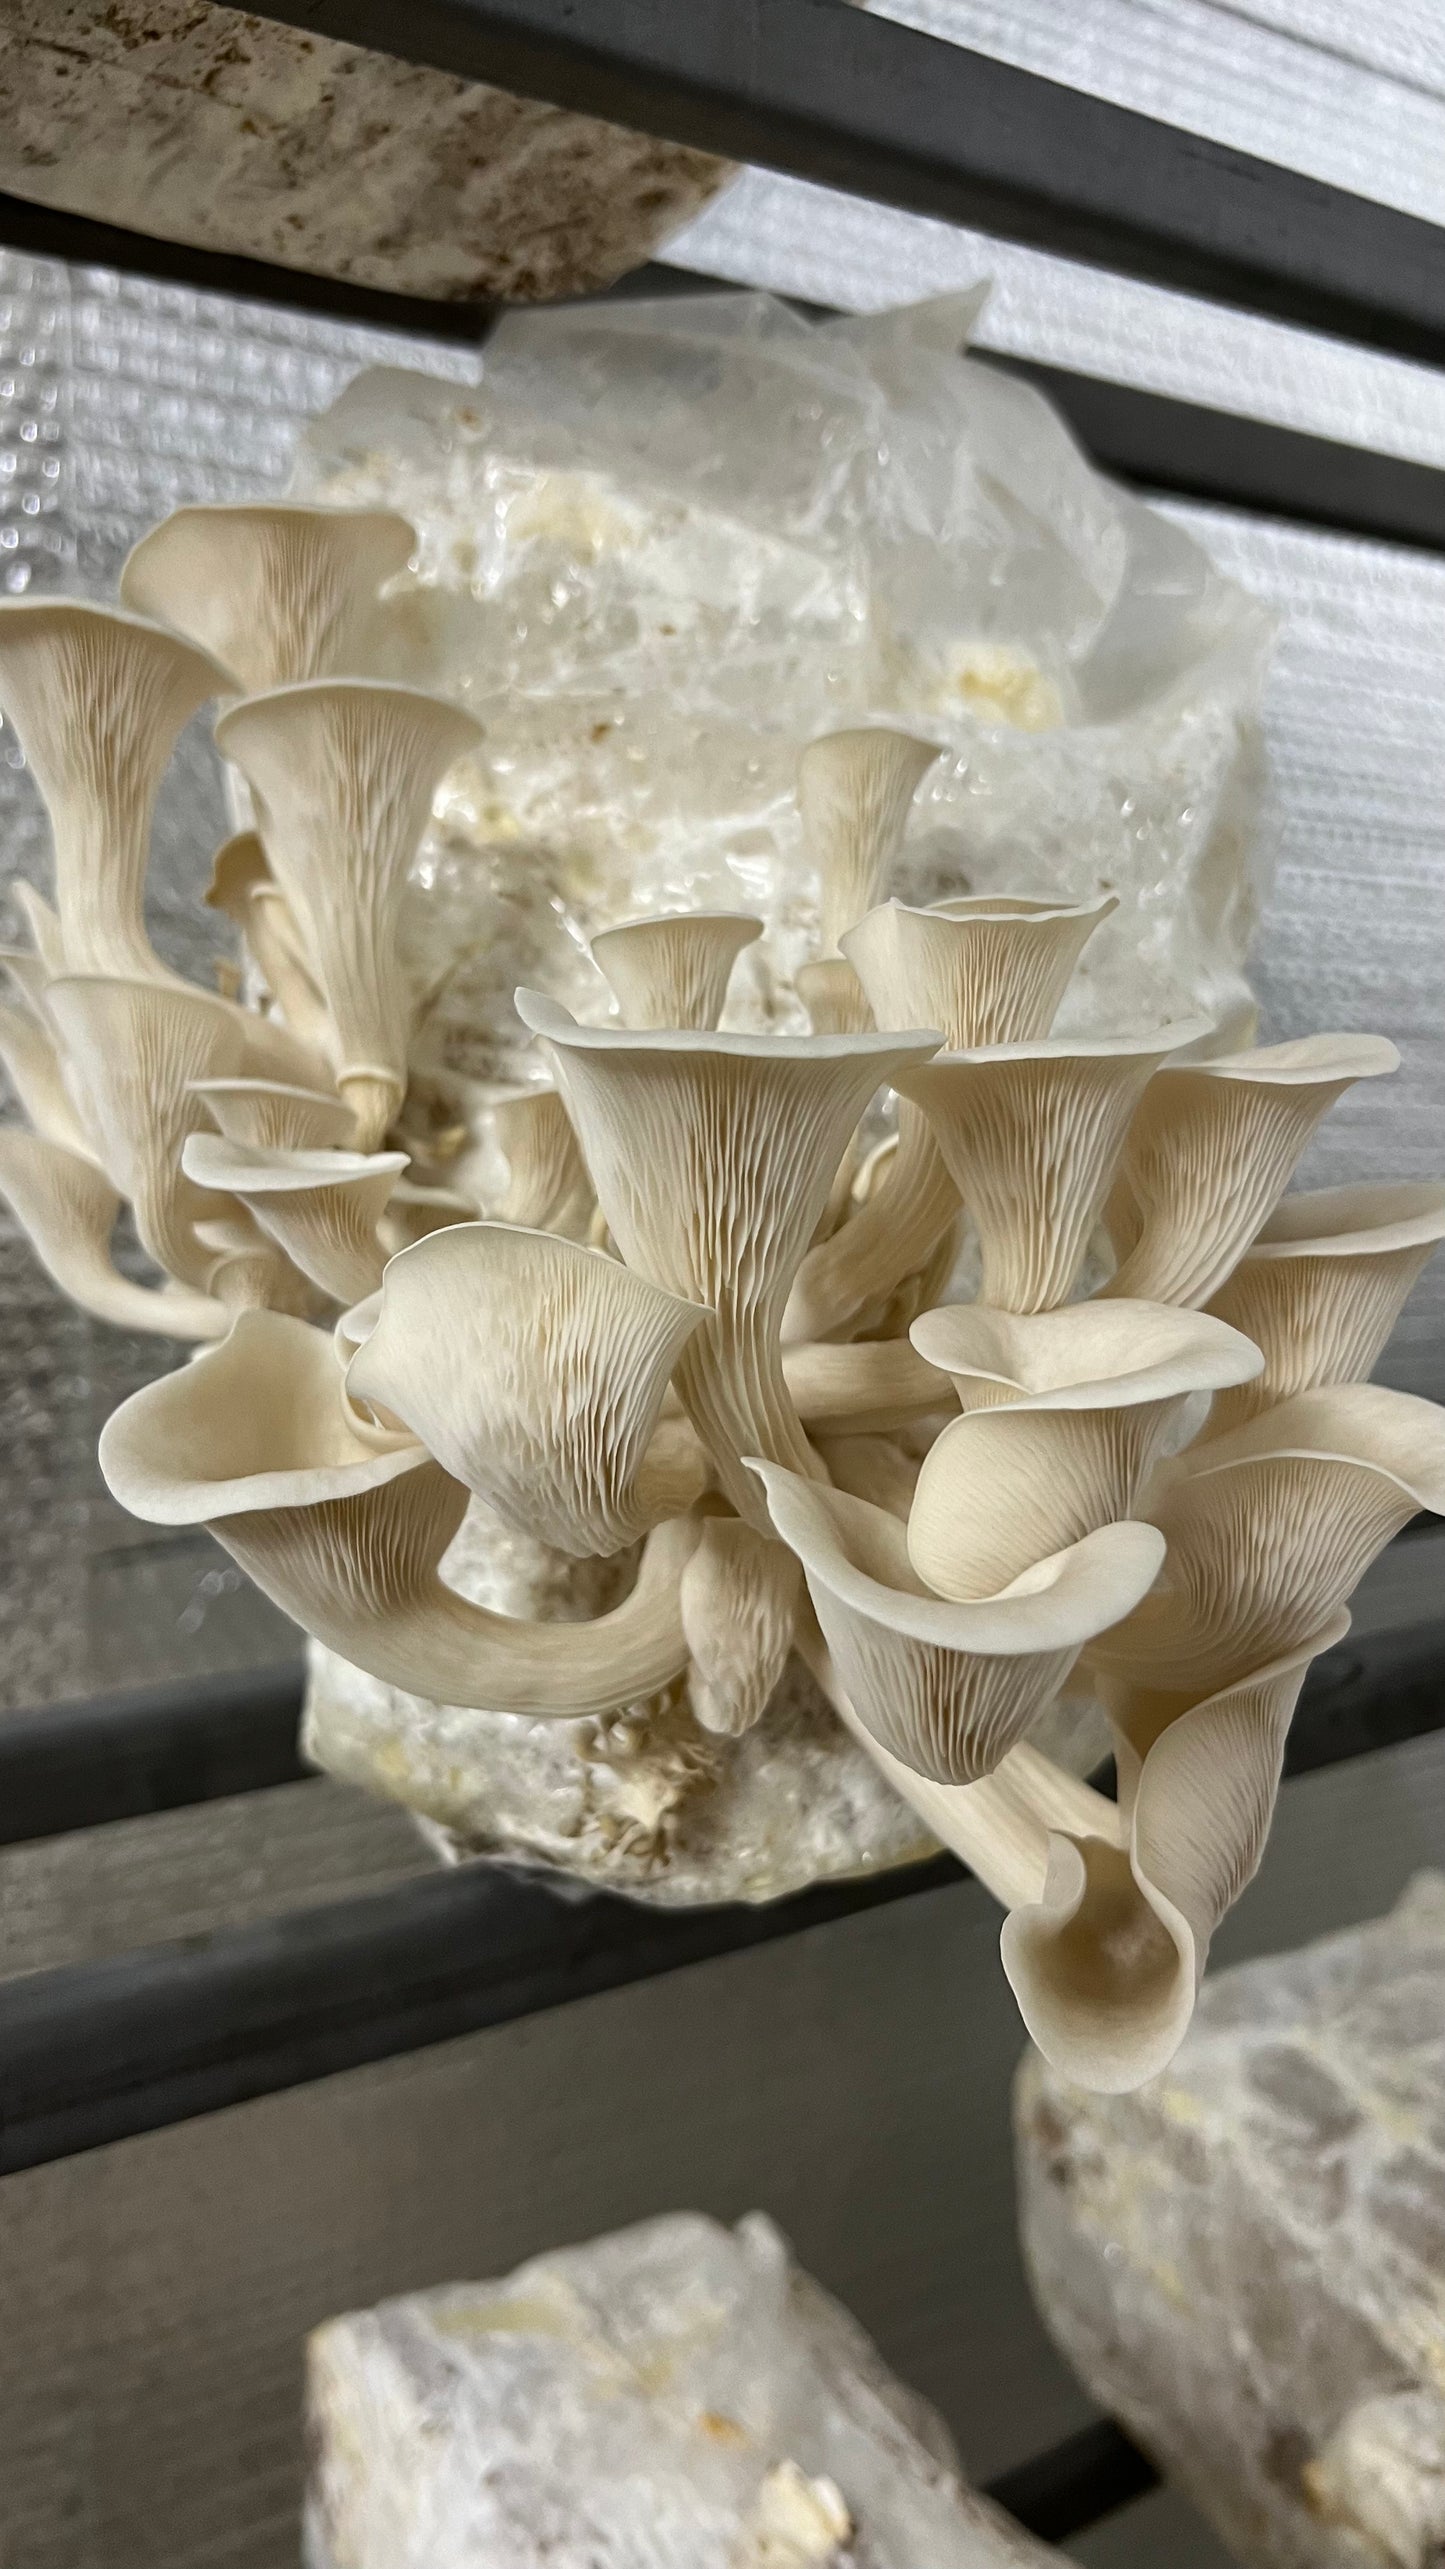 Starter Mushroom grow Kit